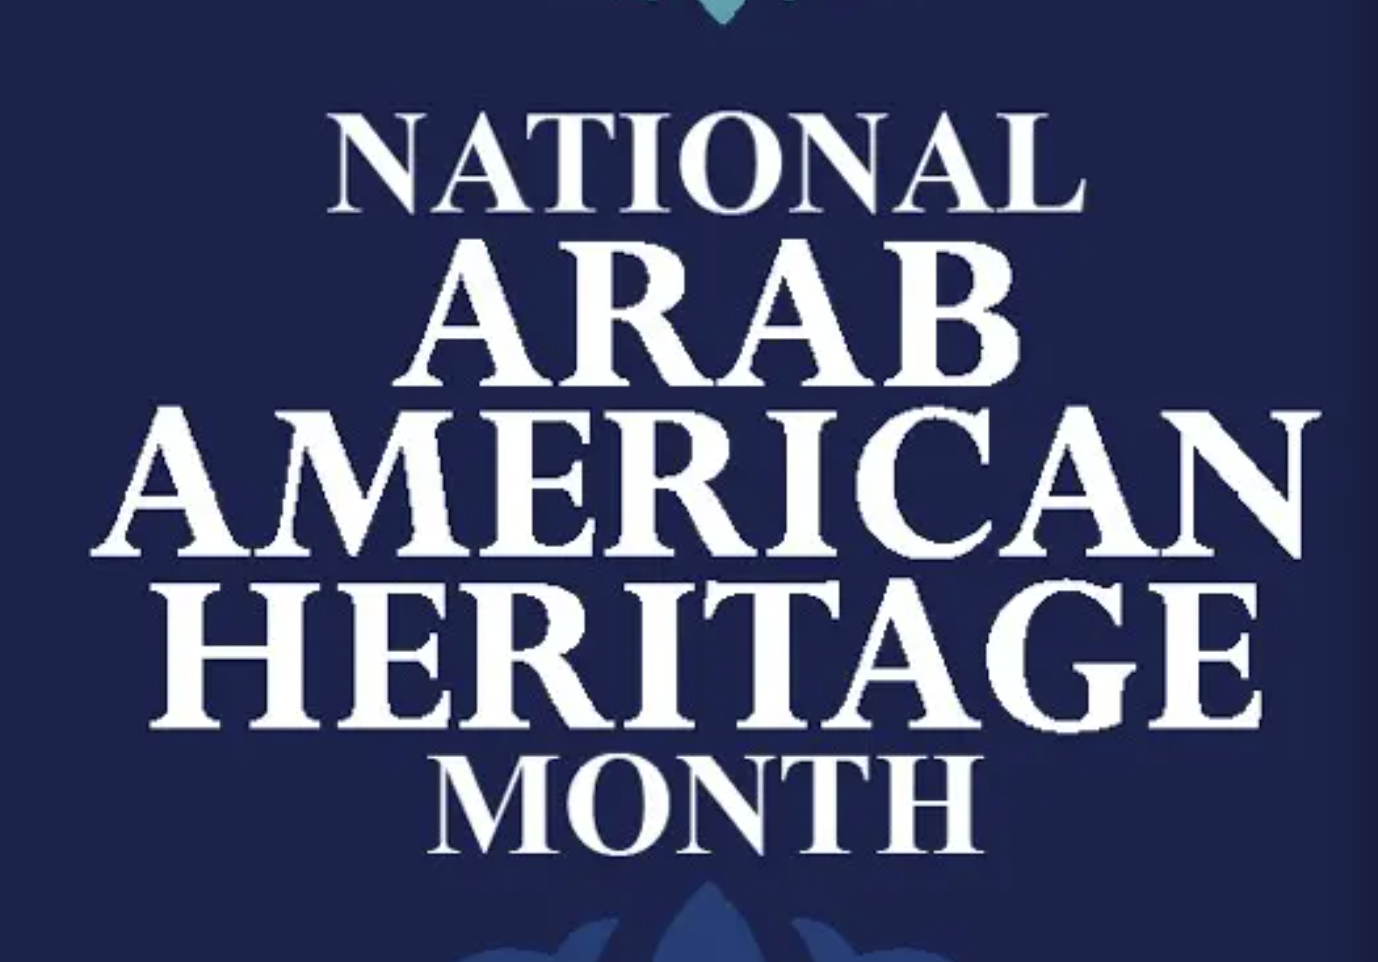 Arab American Heritage